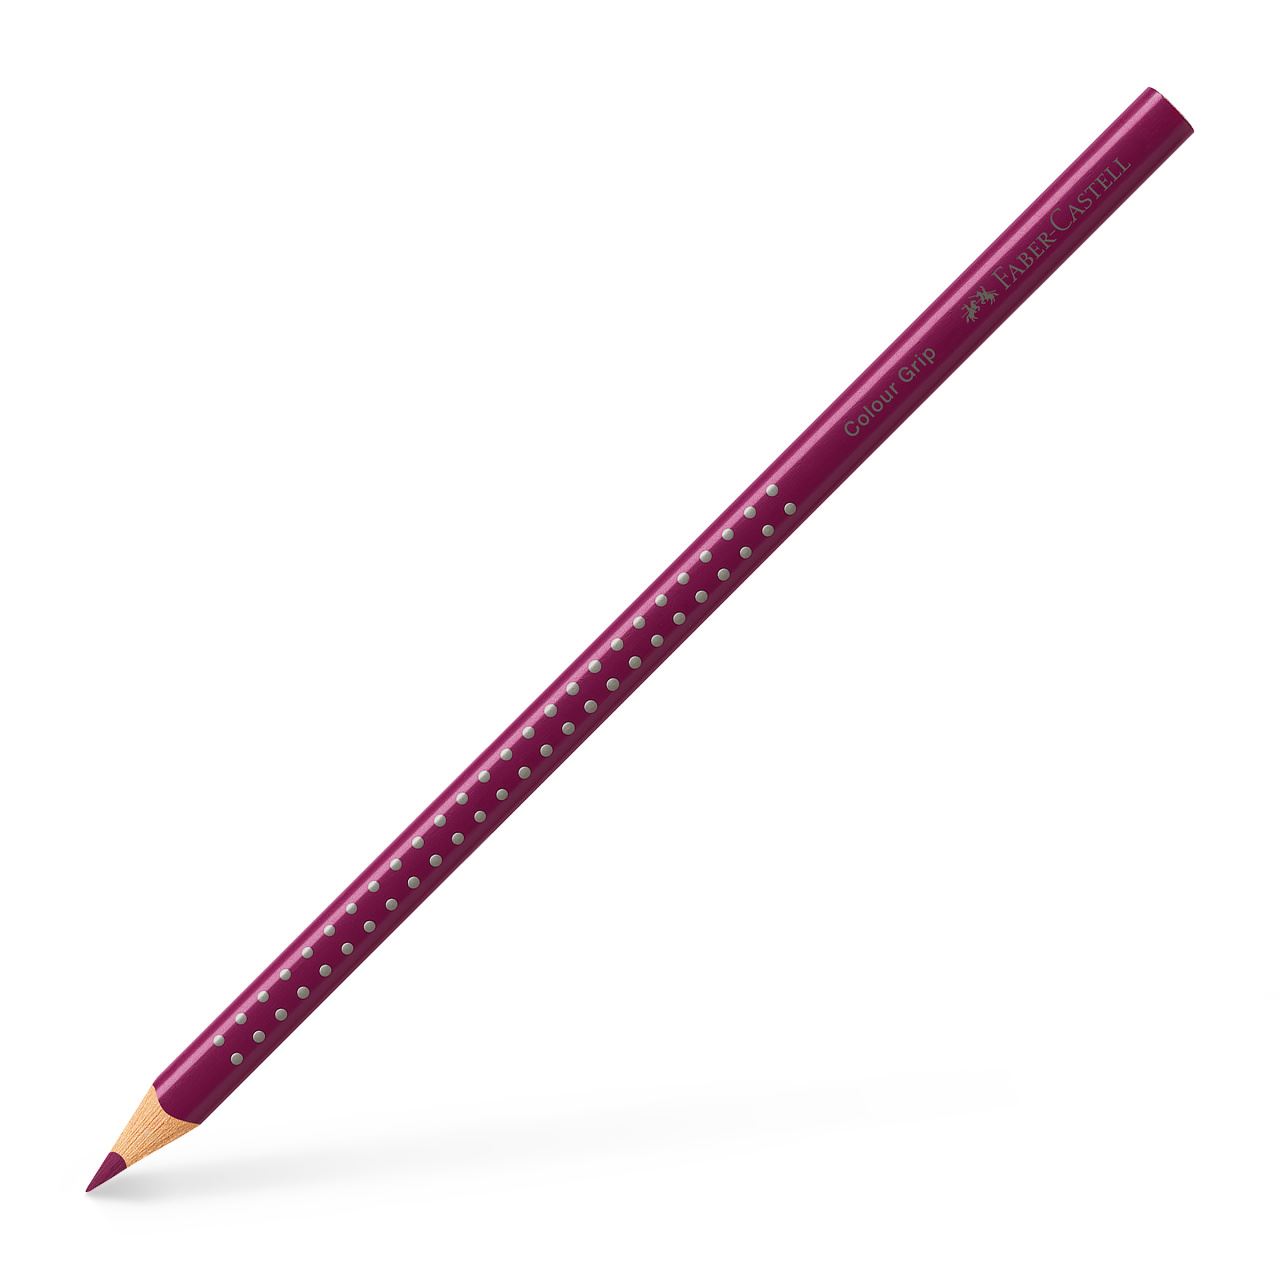 Faber-Castell - Colour Grip colour pencil, magenta